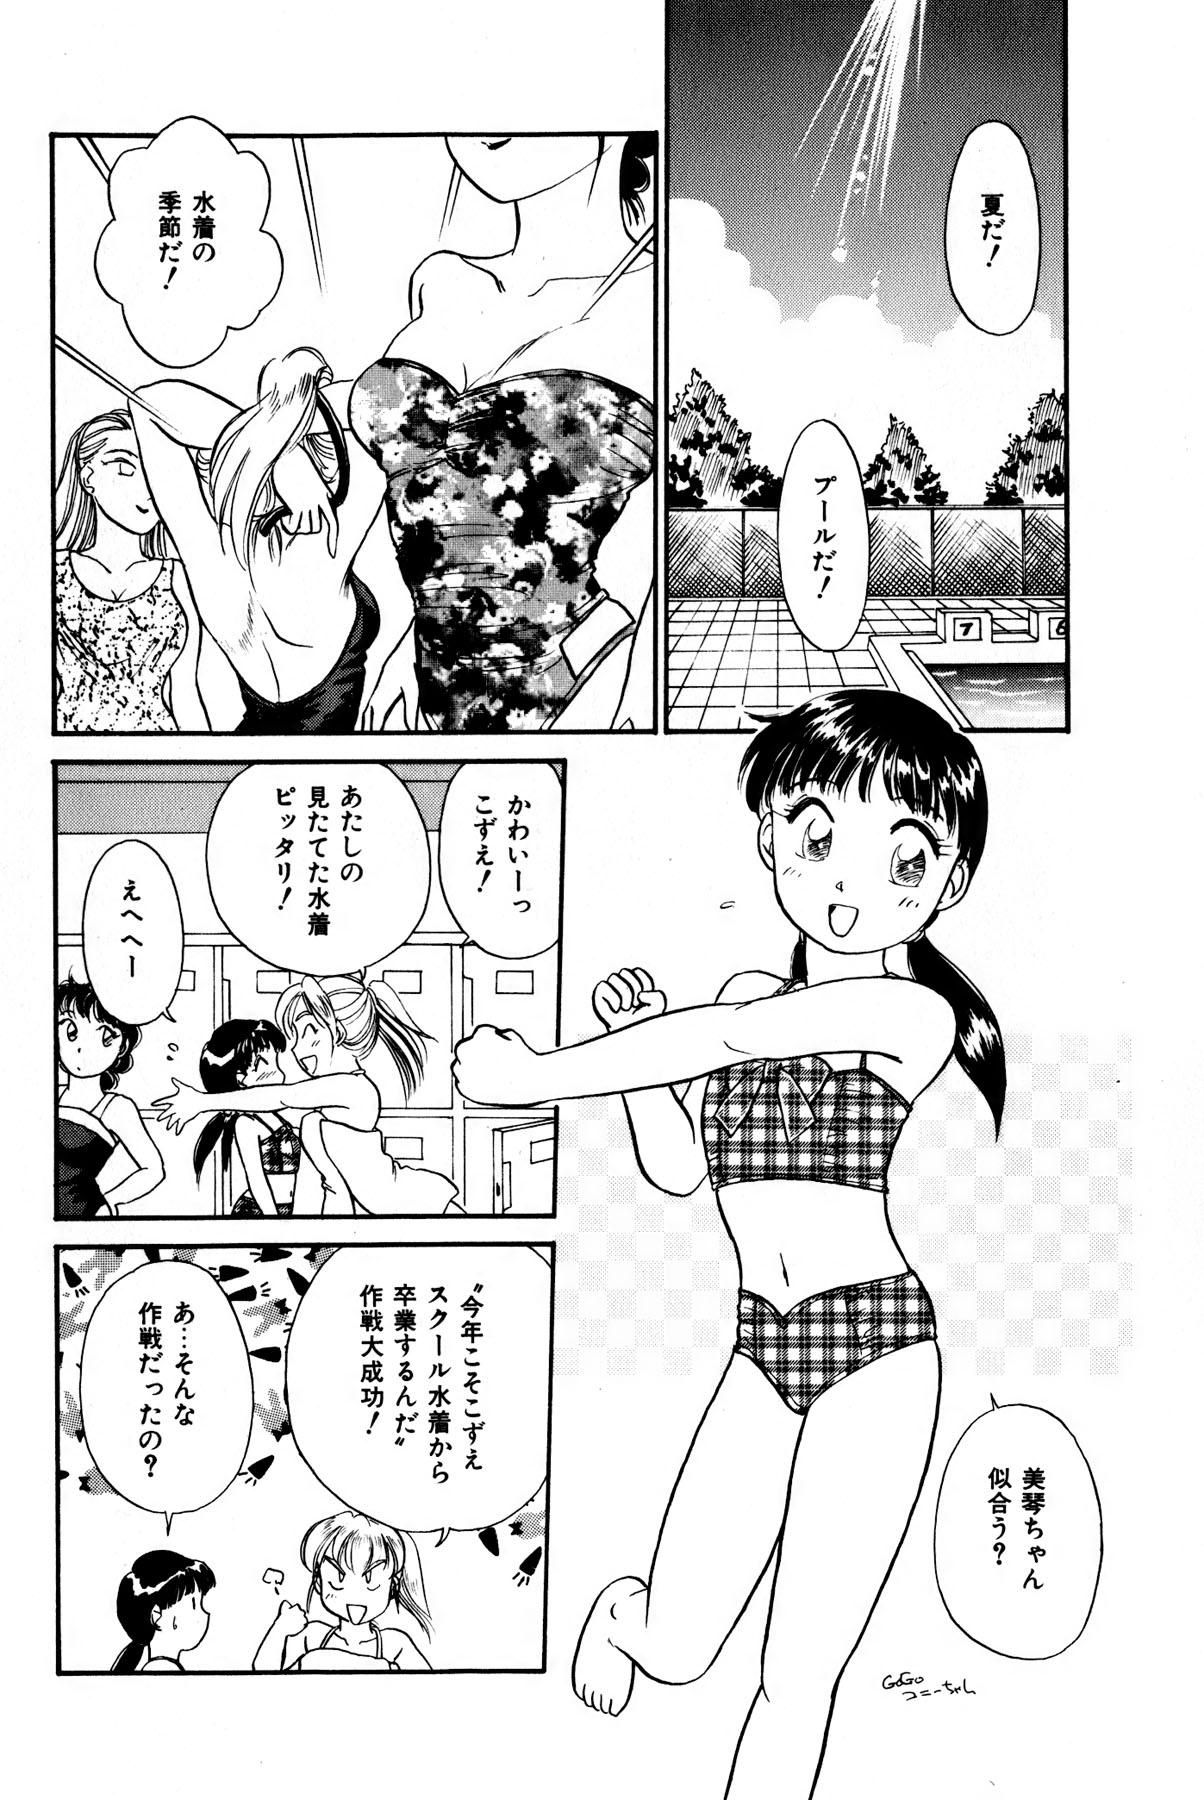 Otakara Comic 178